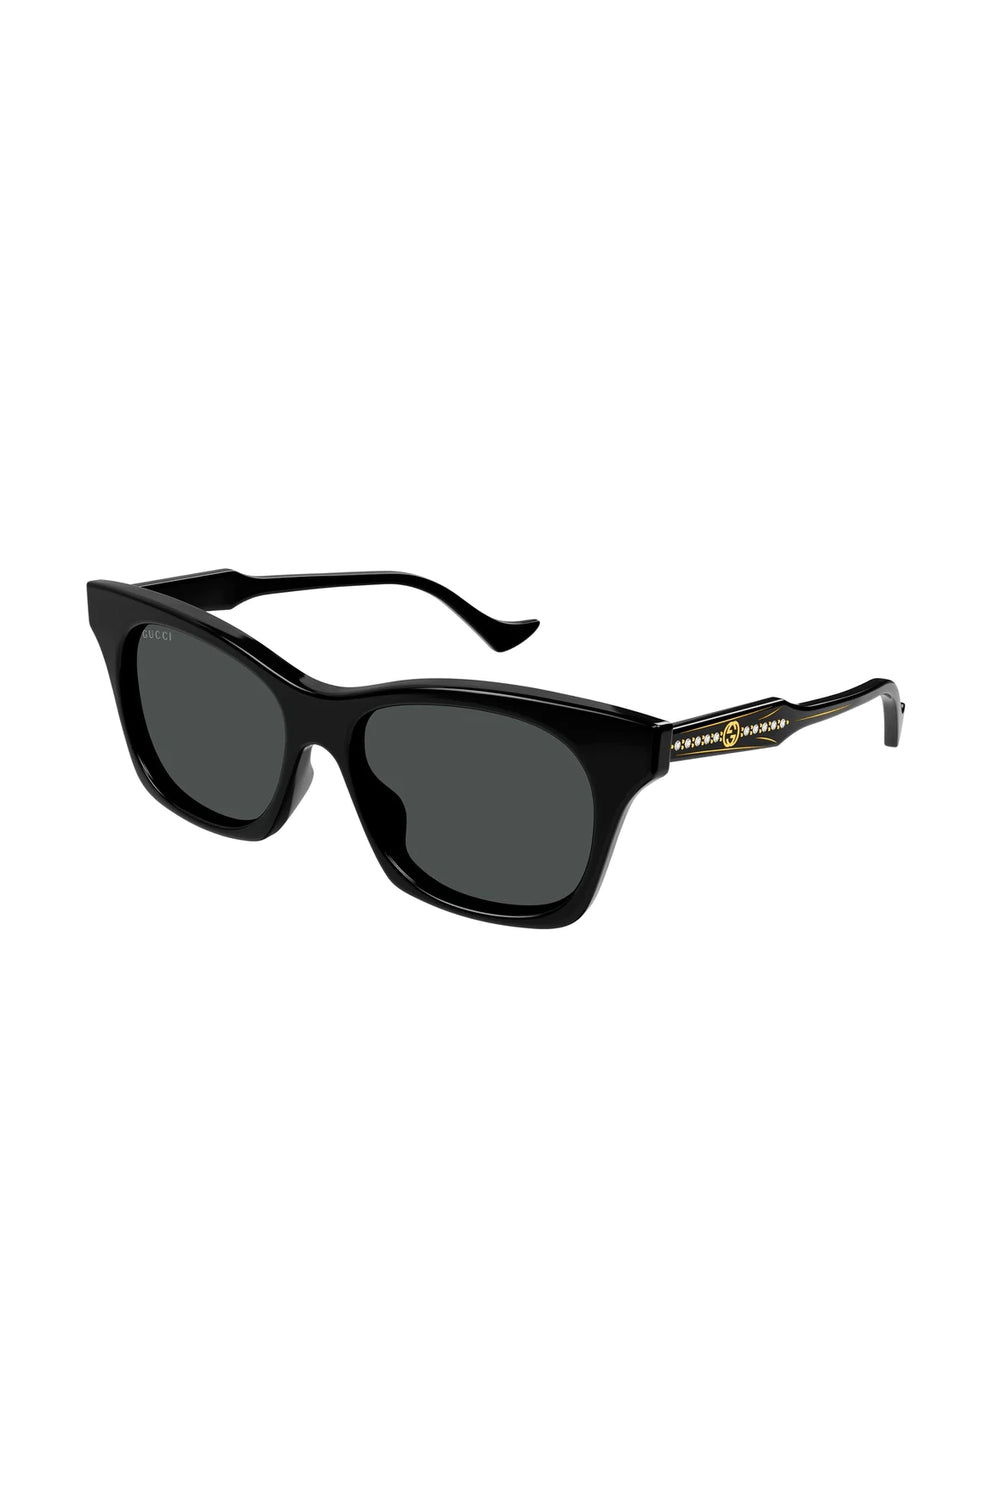 Gucci Cat-Eye Sunglasses Black GG1299S